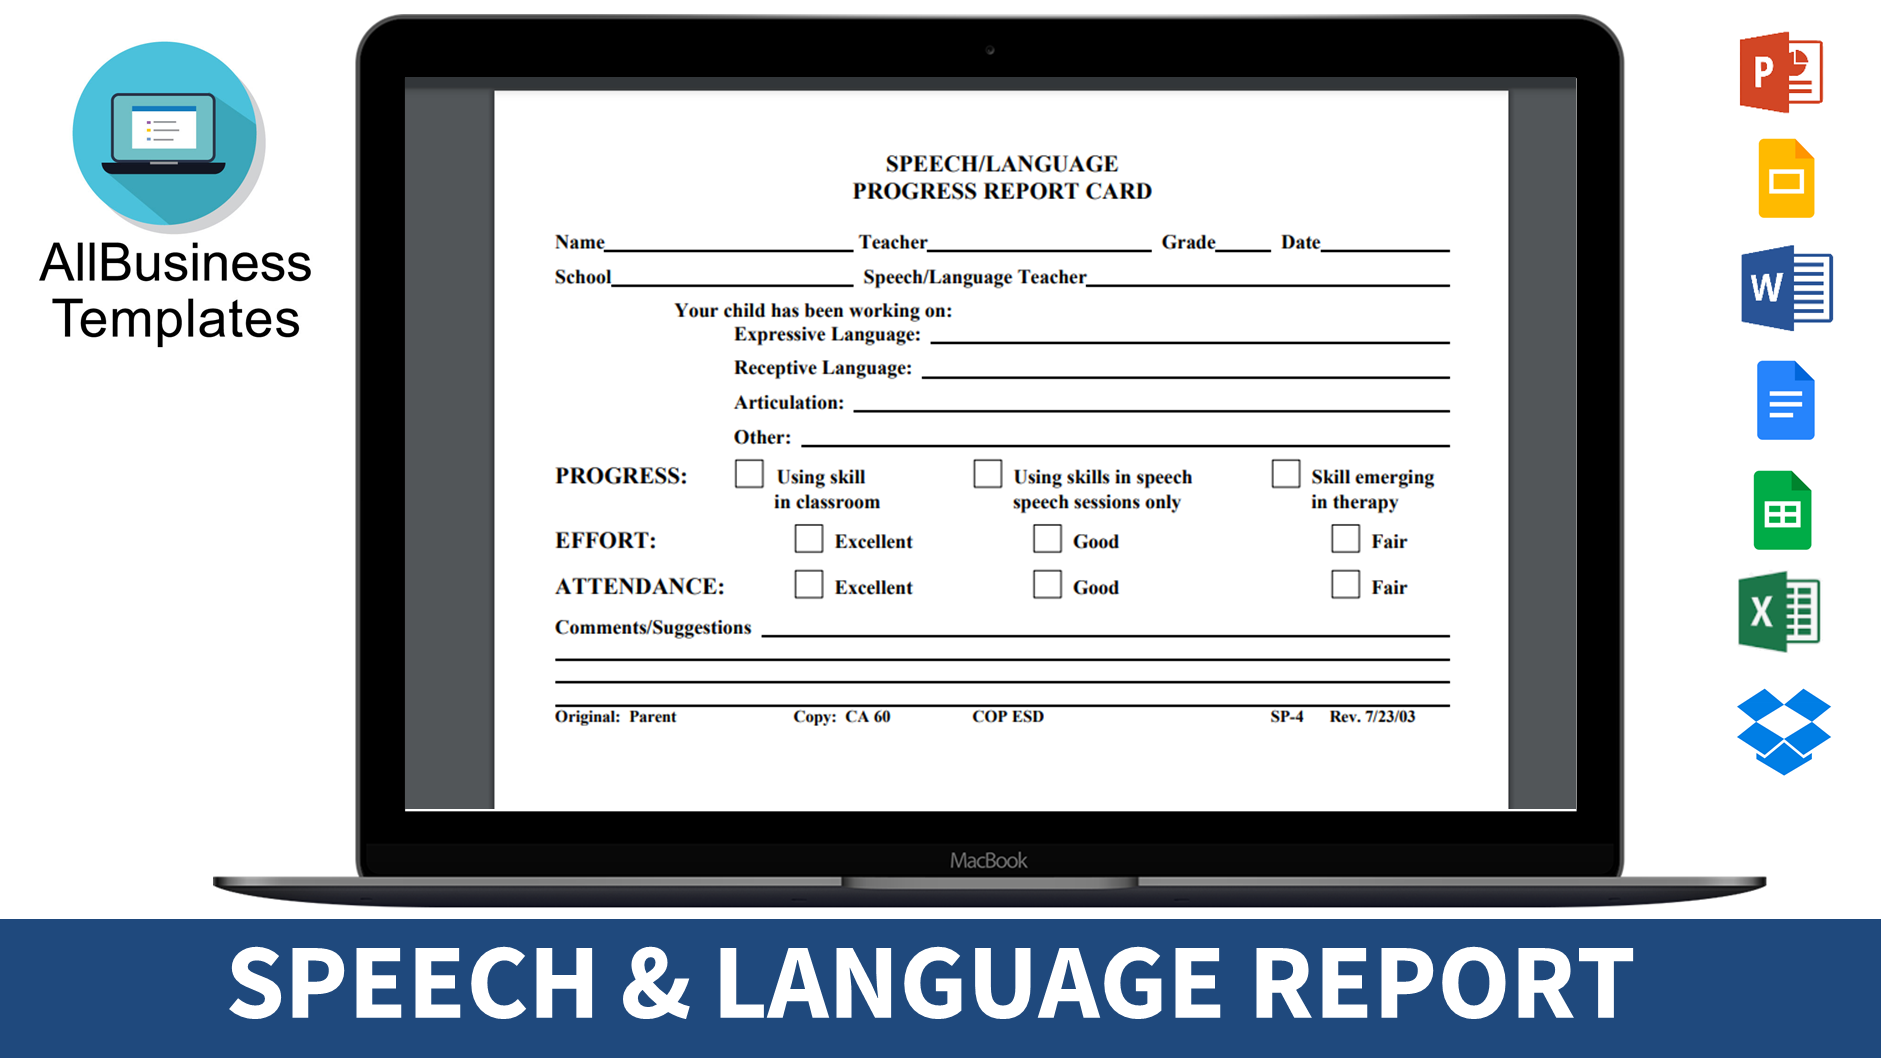 Speech & Language Progress Report Card main image